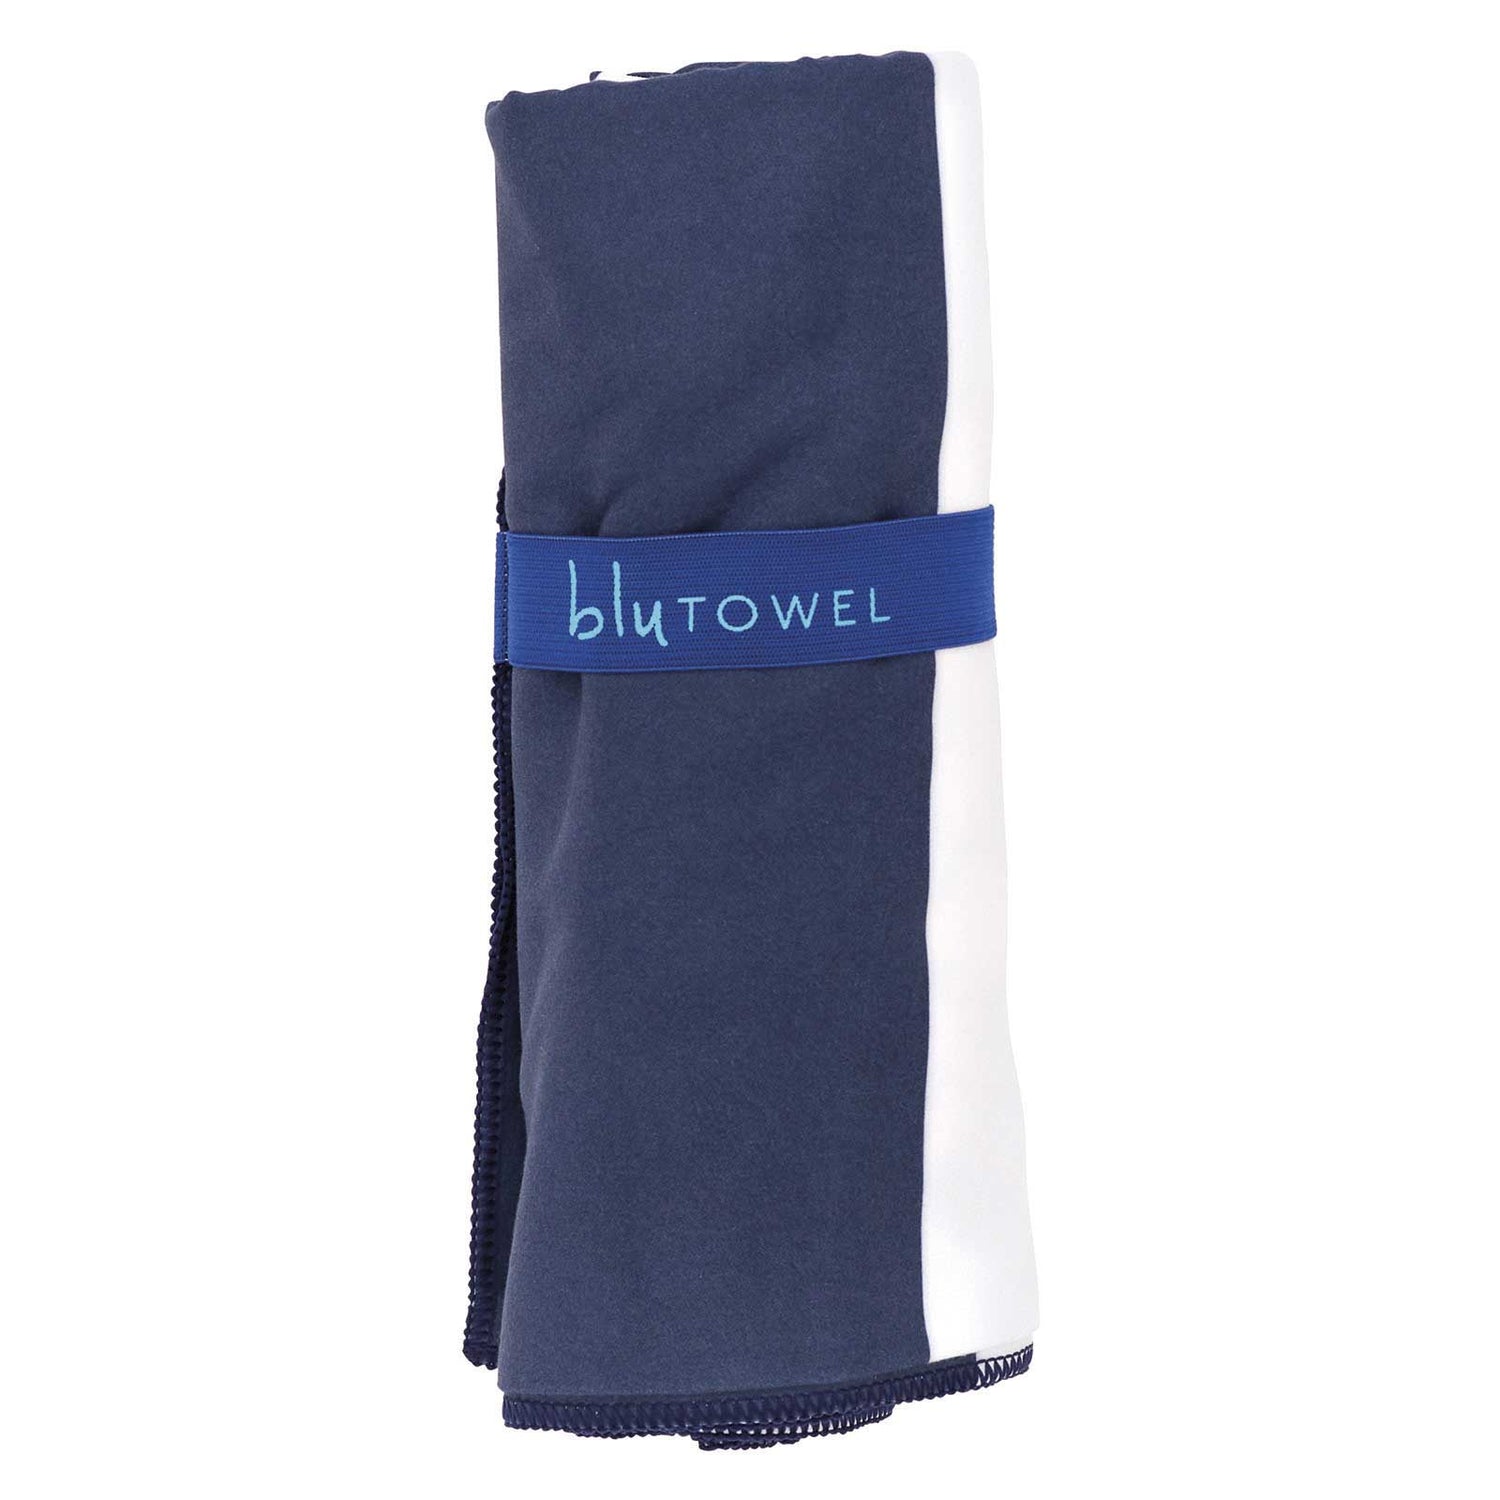 Chris Craft Reversible Eco Beach Towel – rockflowerpaper LLC